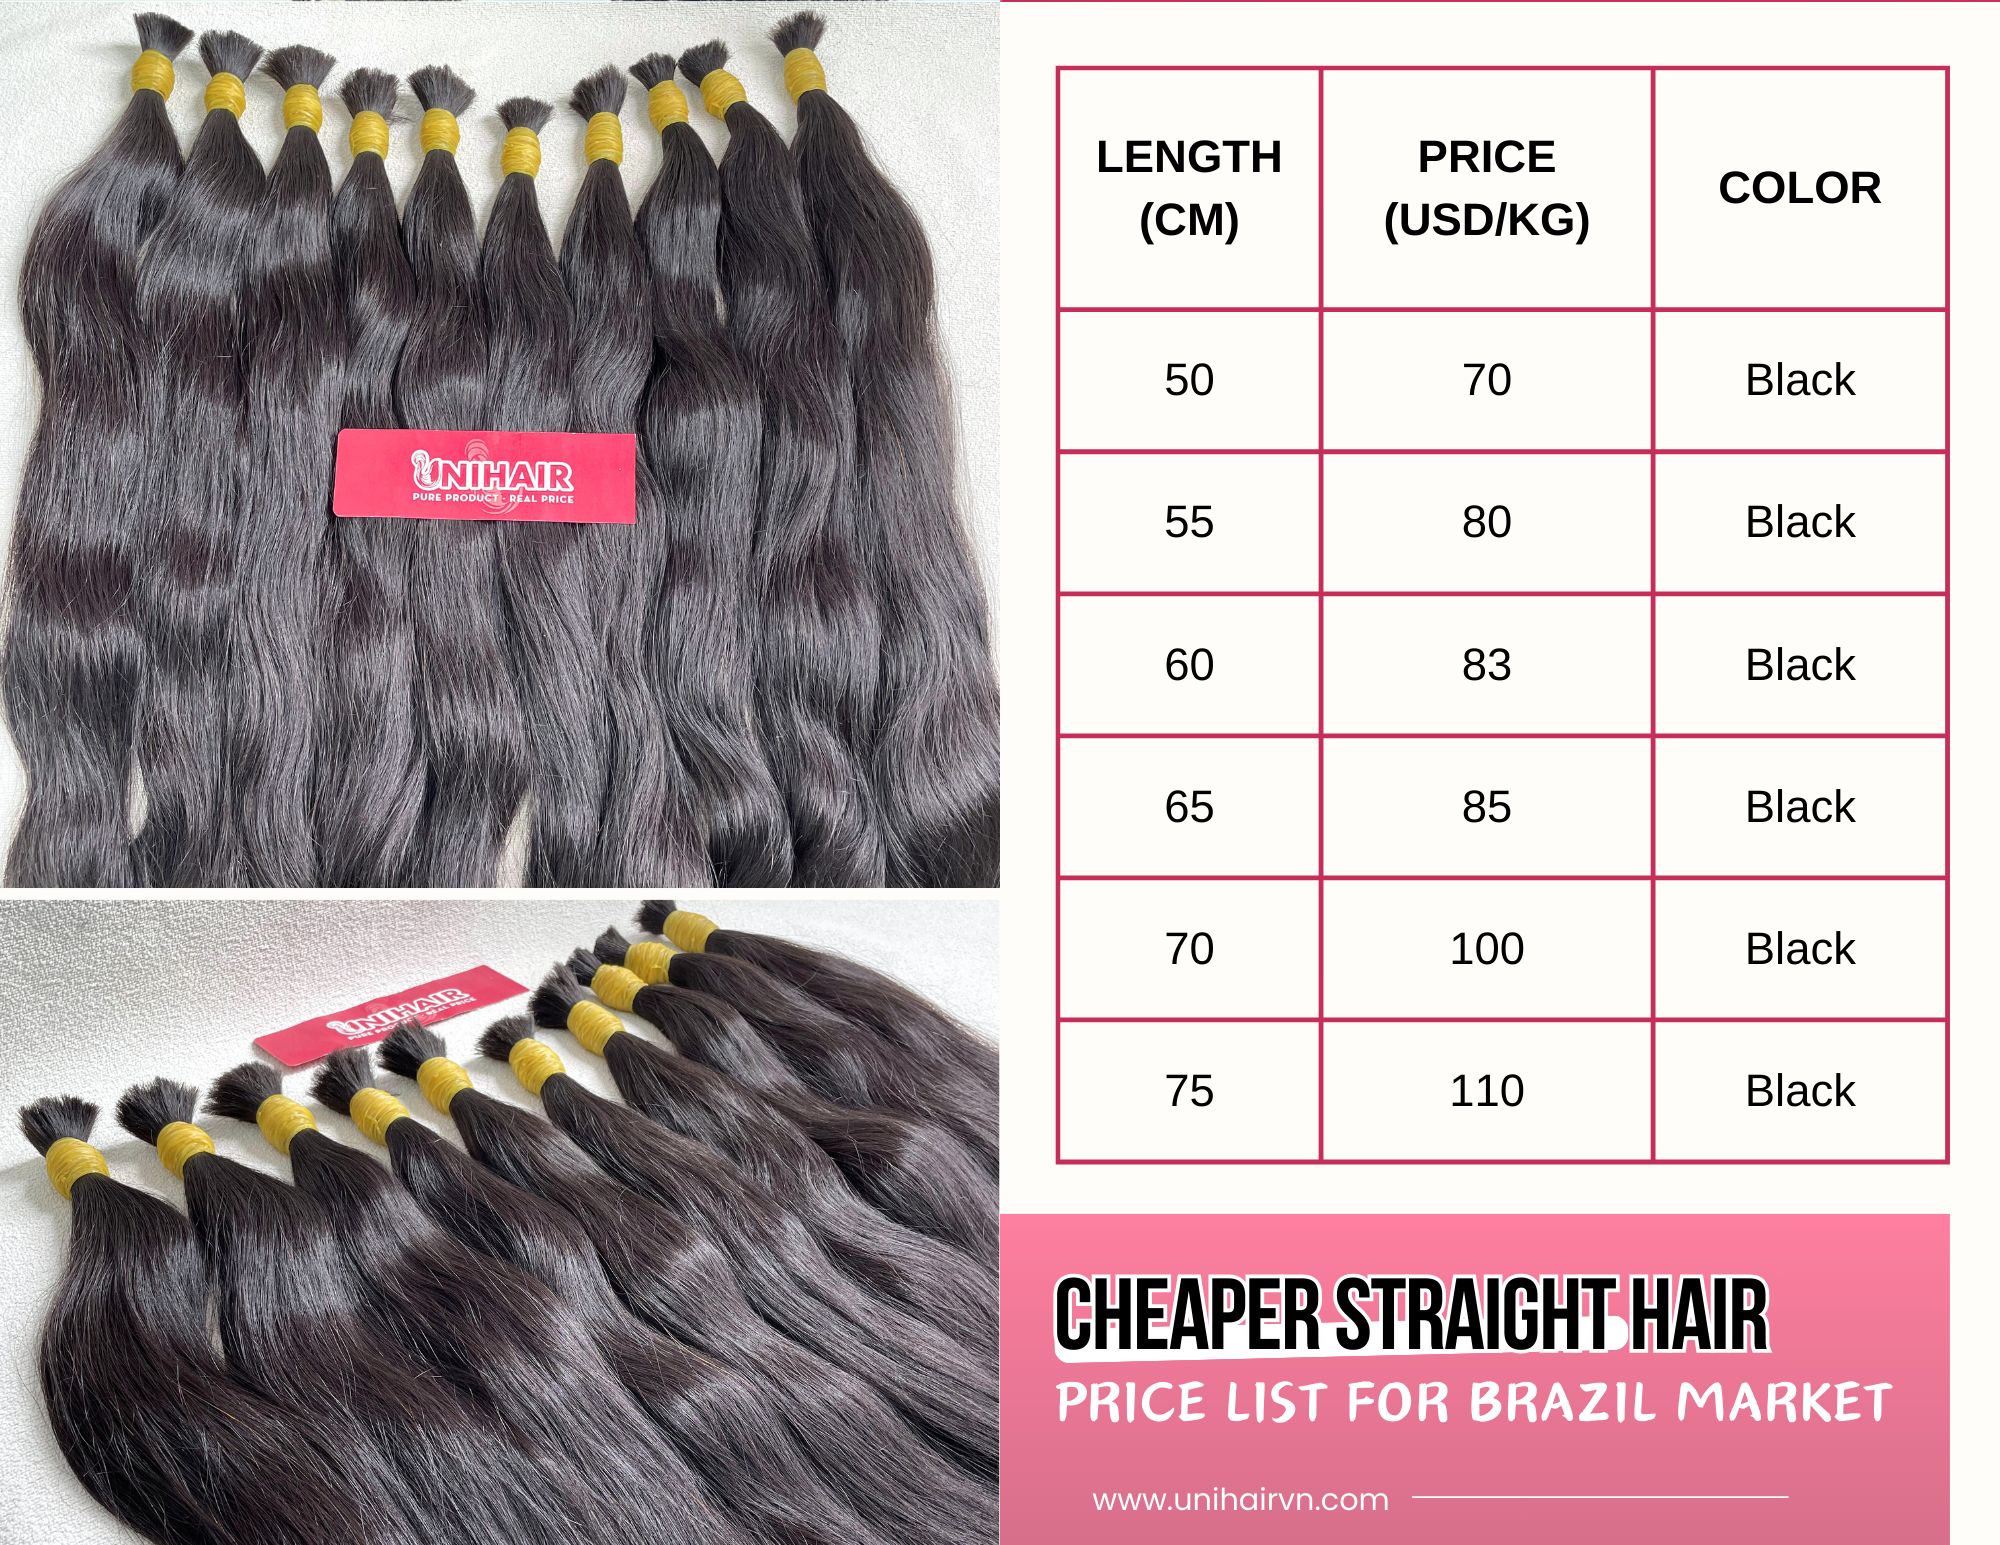 Cabelos Humanos Vietnamita for Brazil - cheaper straight hair